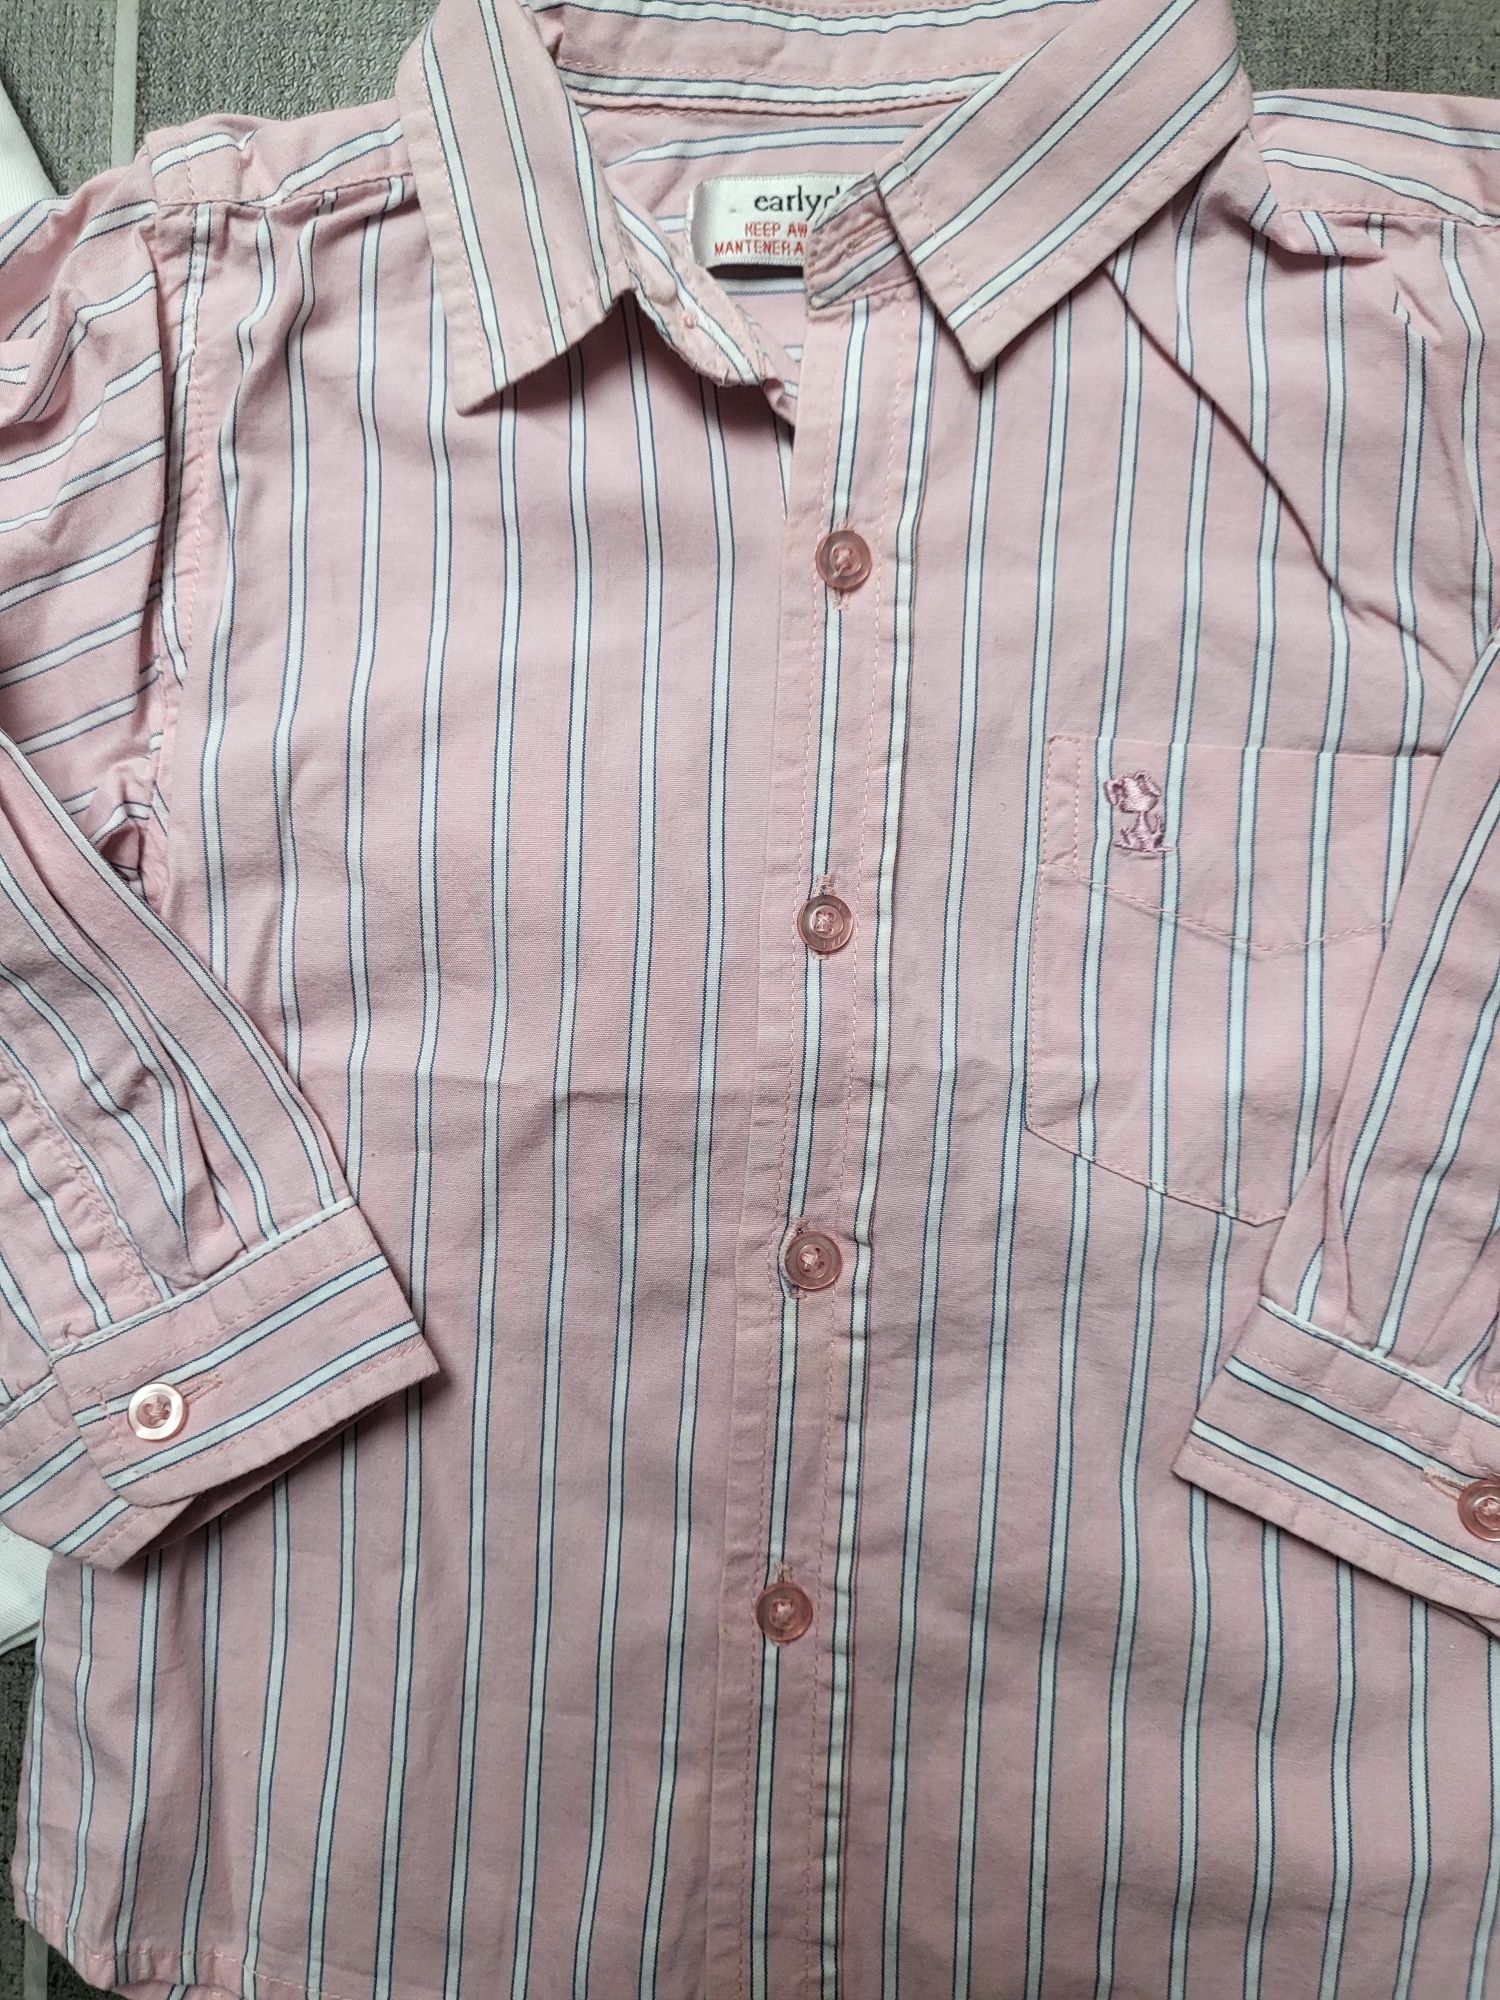 92/98 koszula bluzka tunika jak nowe carter's/ early days